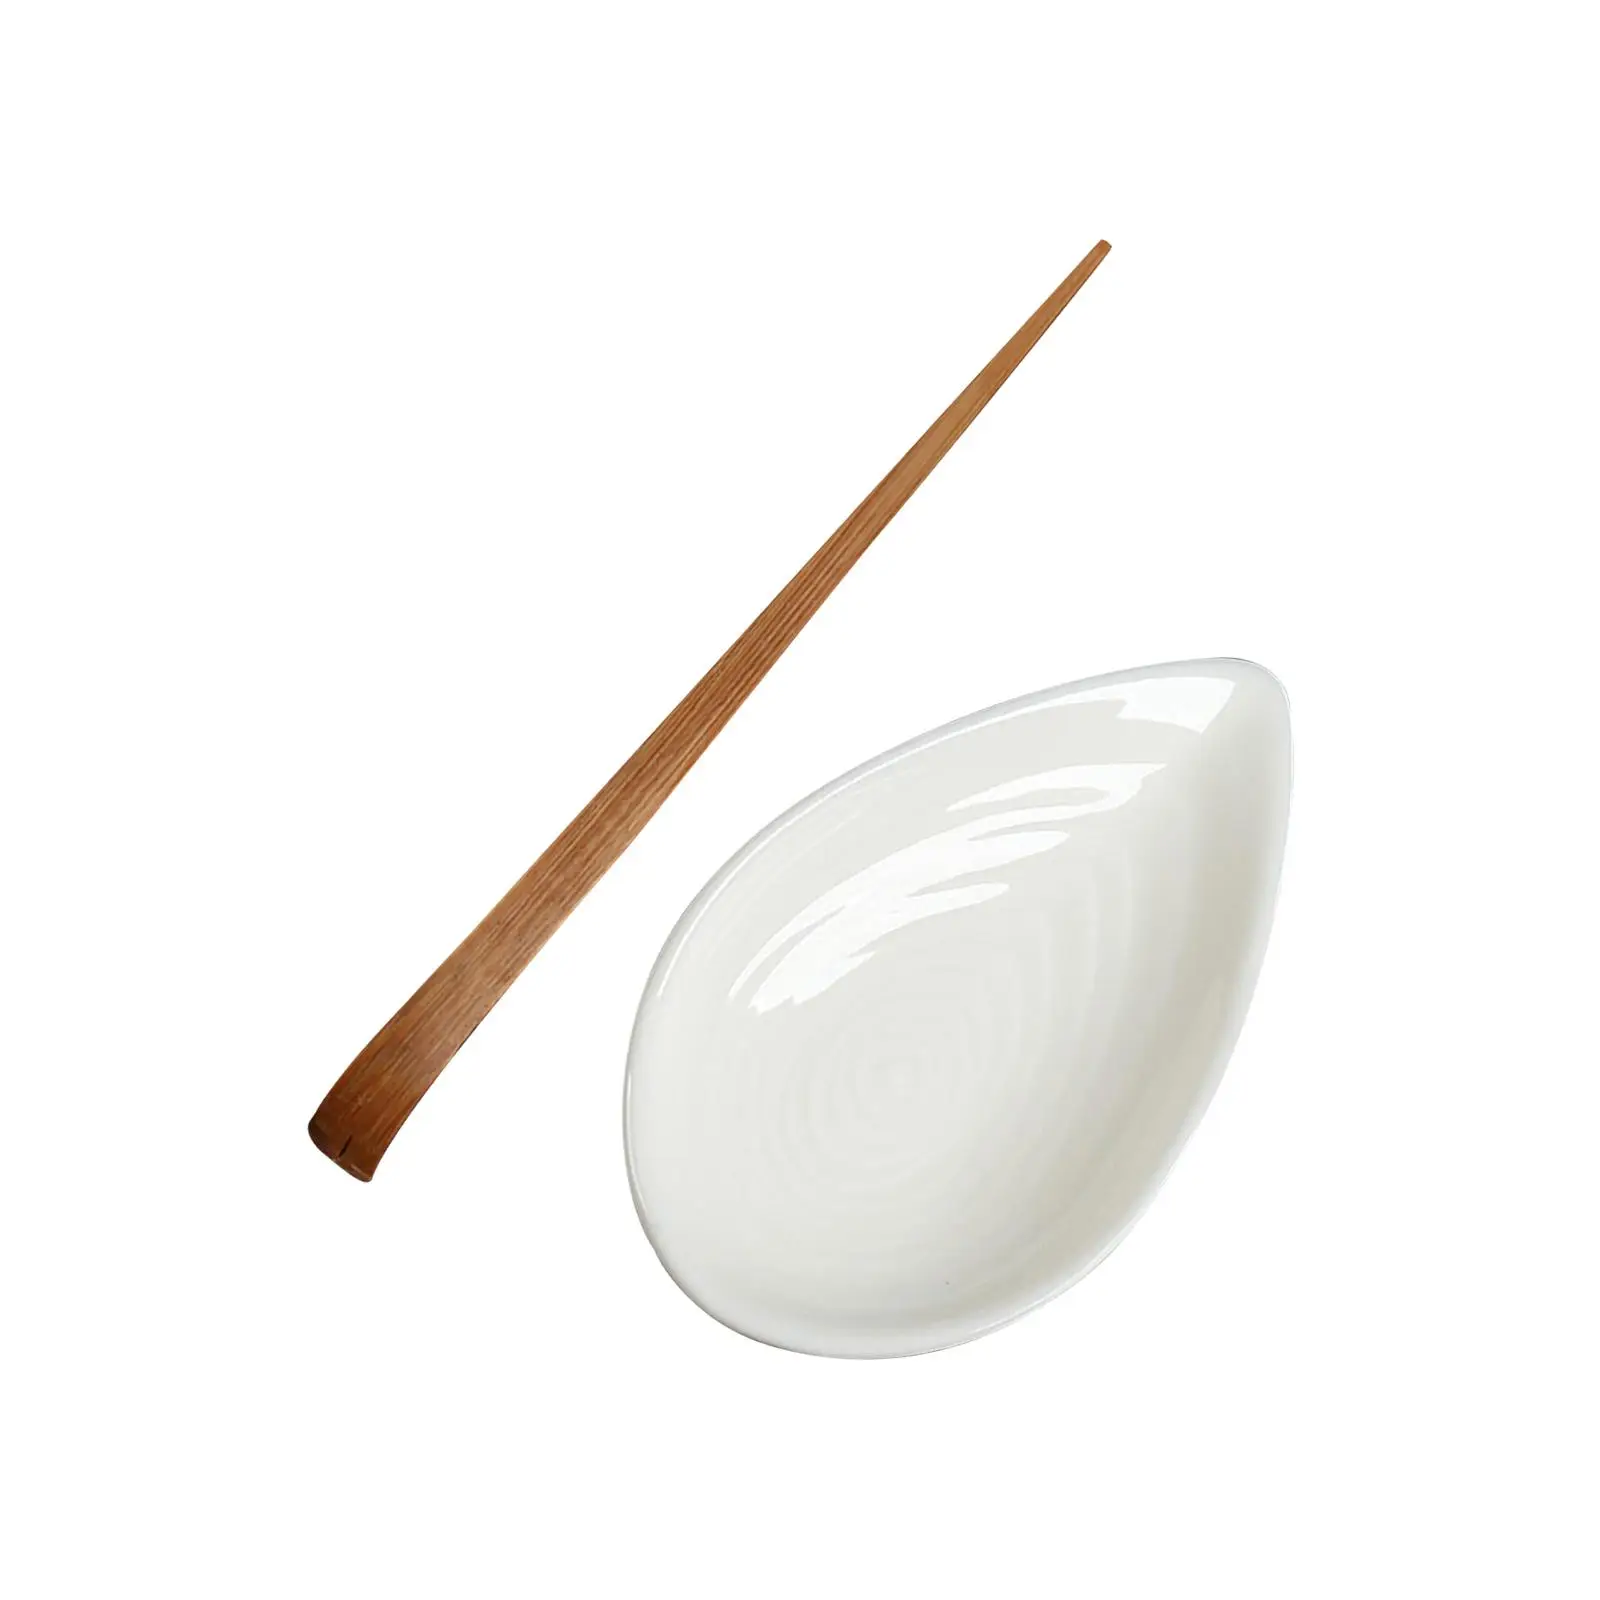 Ceramic Teaspoons Tea Shovel Tea Spoon Tea Art for Coffee Countertop Kitchen